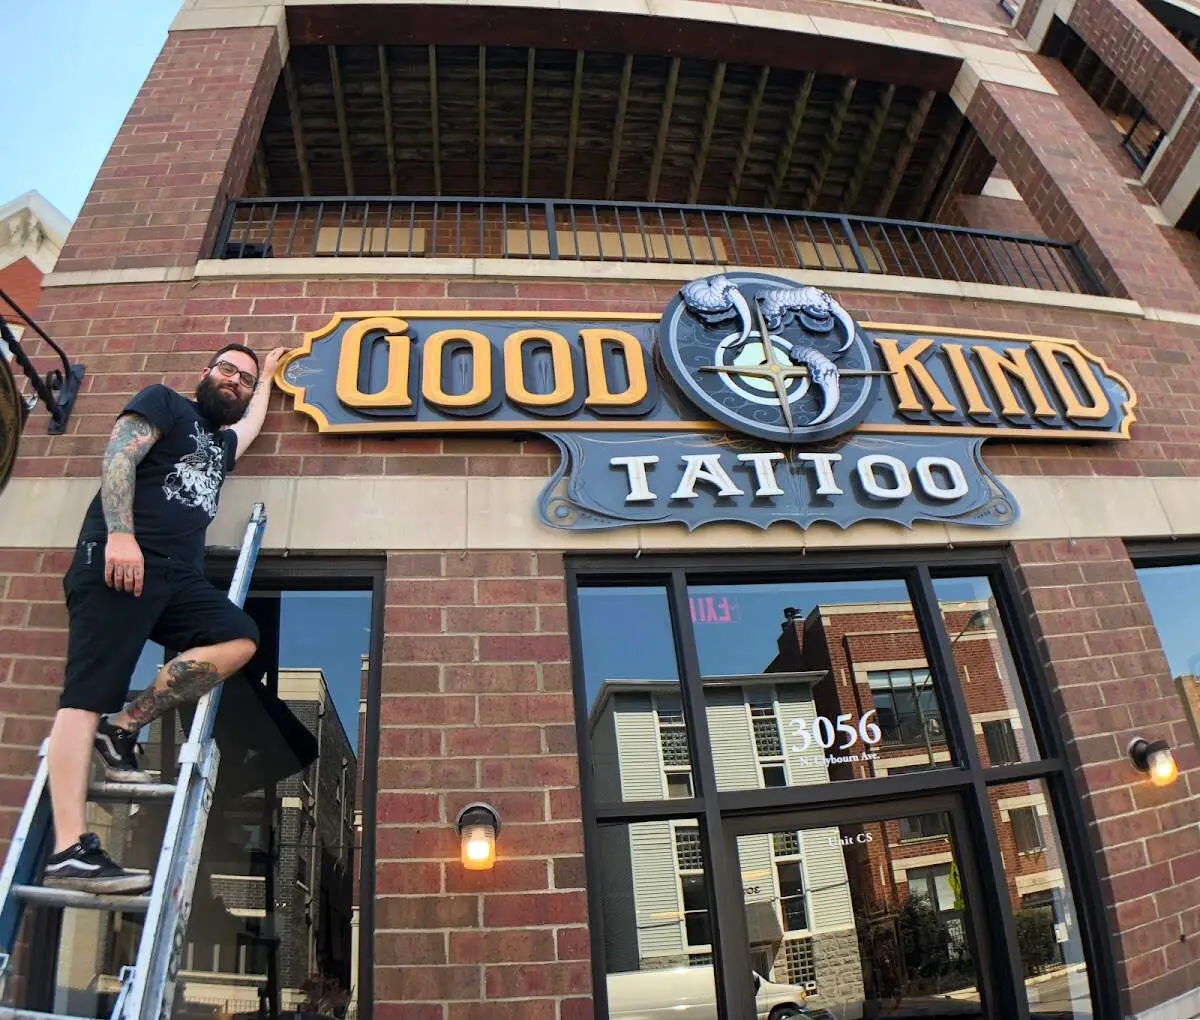 Goodkind Tattoo - Chicago